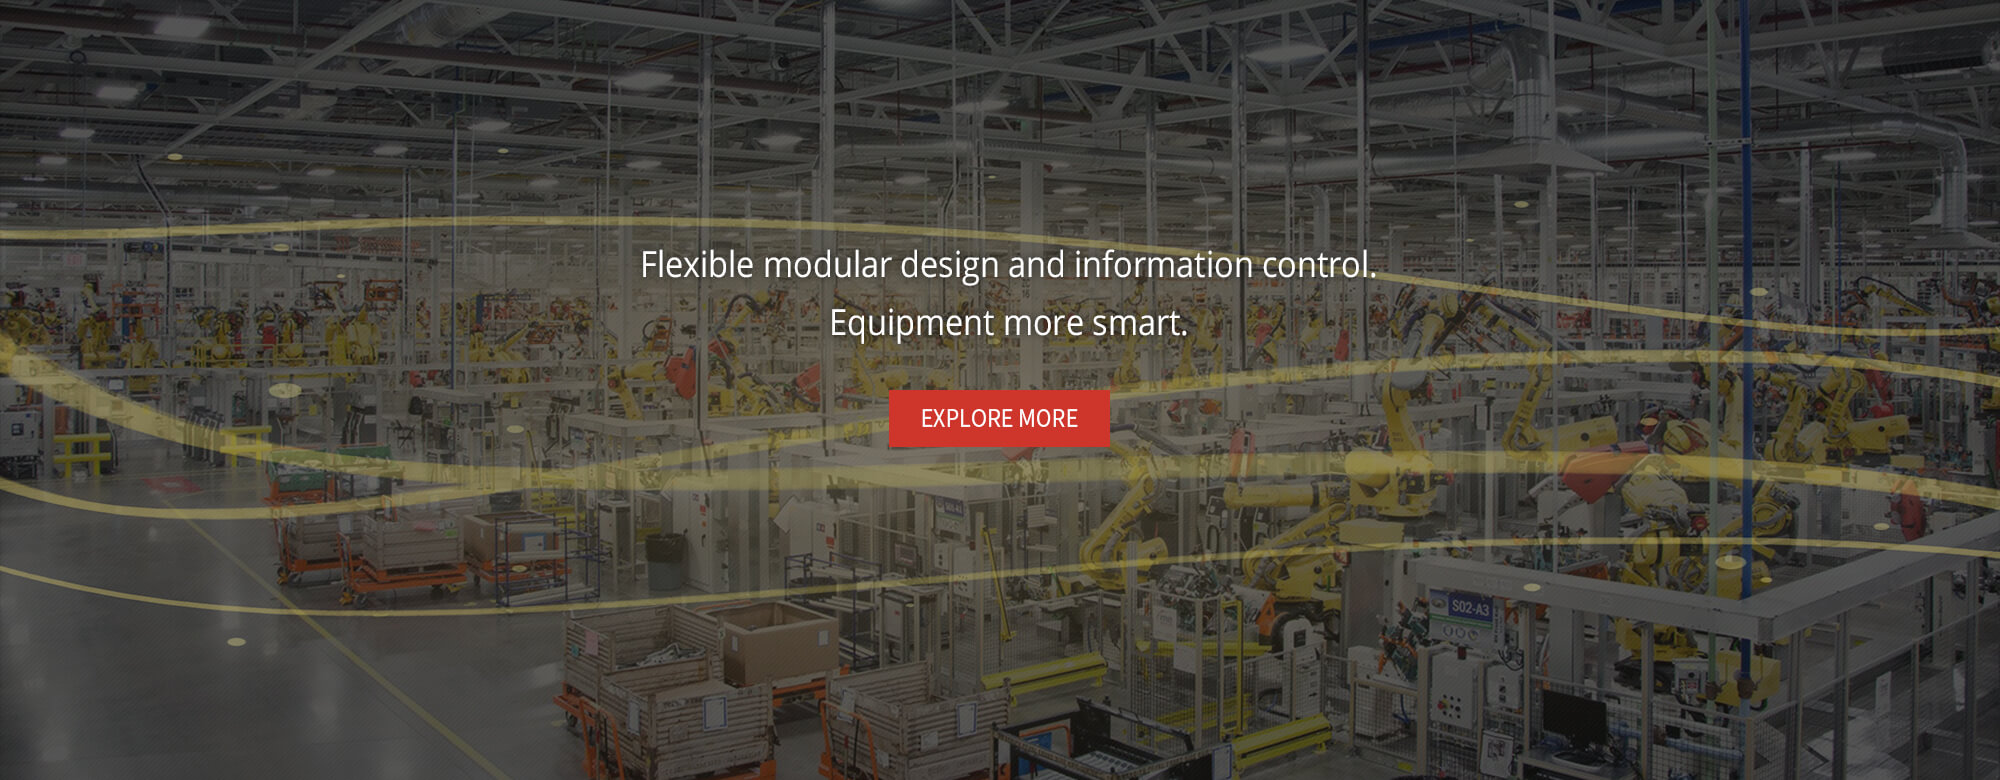 Flexible modular design and information control.